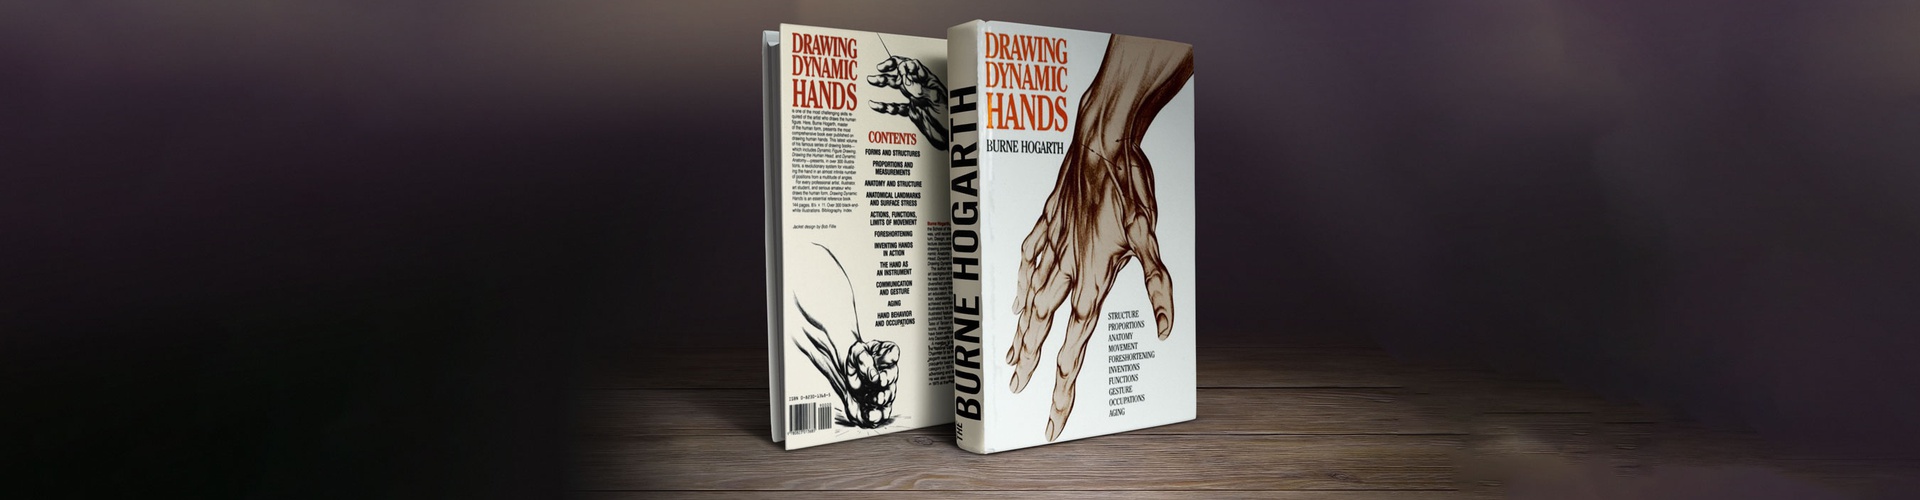 Drawing Dynamic Hands (Practical Art Book) by Burne Hogarth